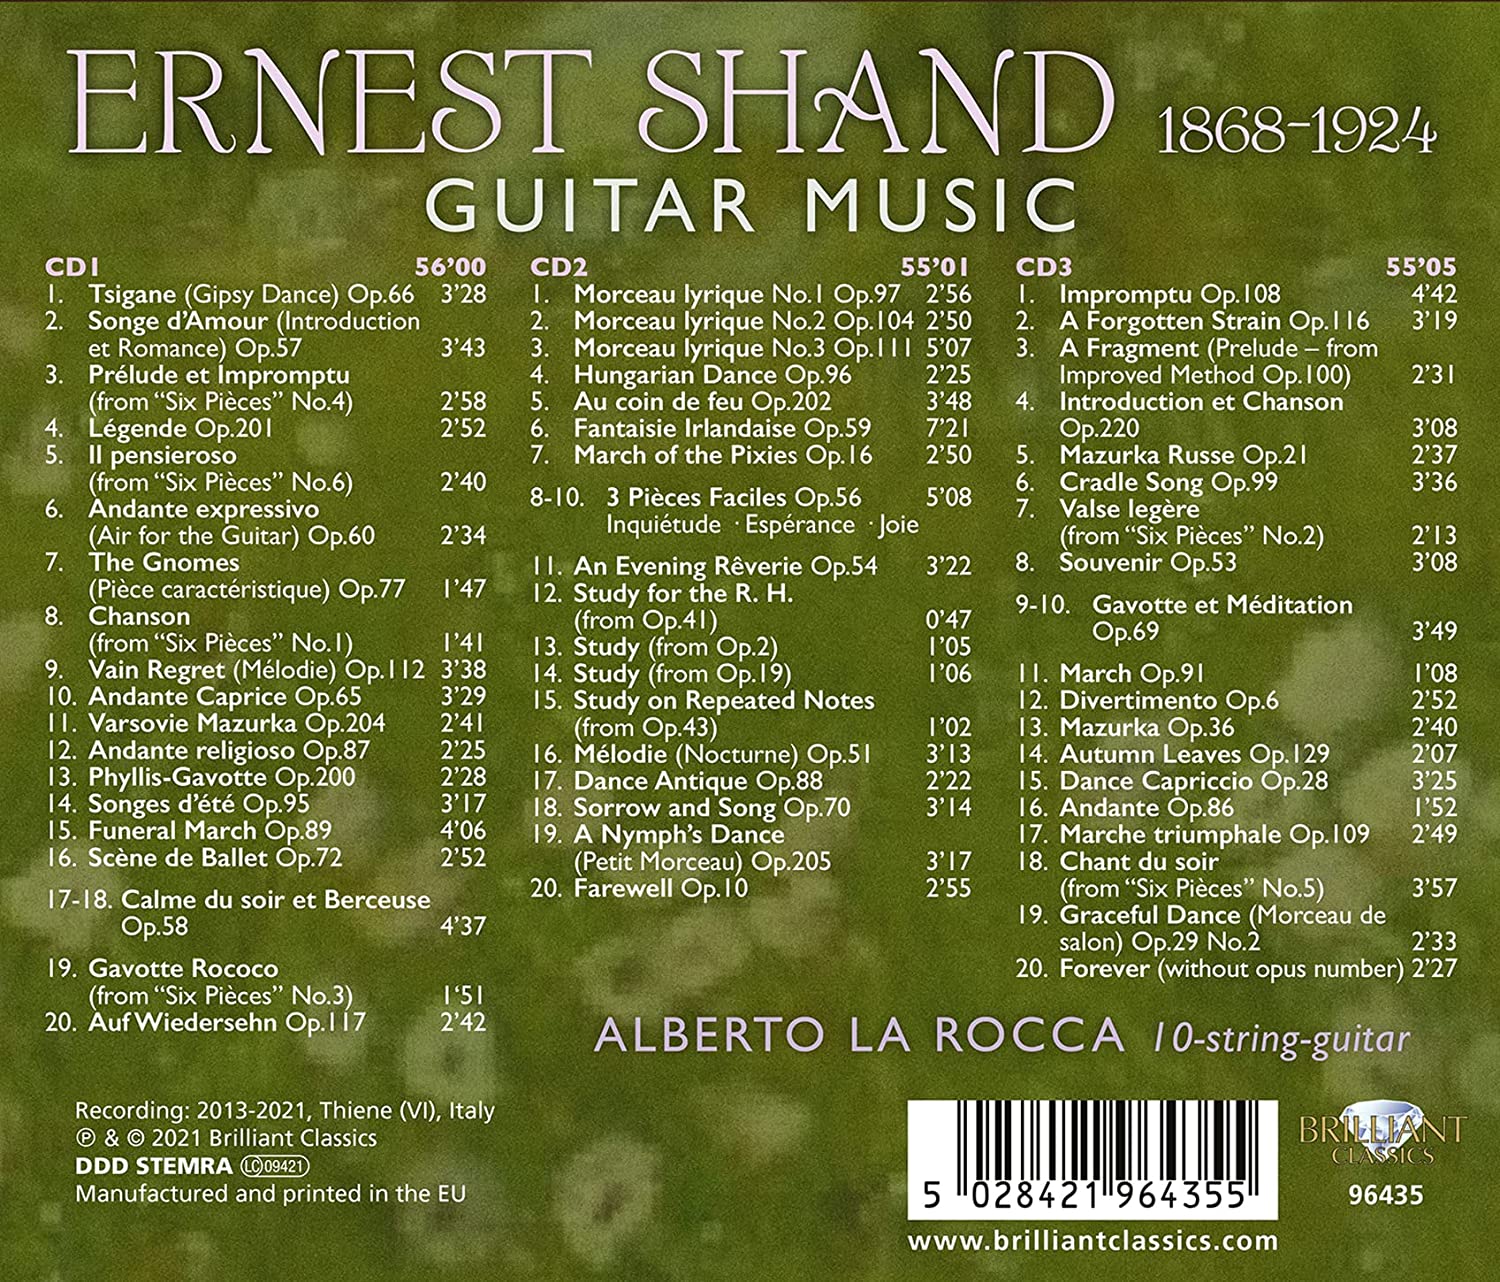 Alberto la Rocca 어니스트 섄드: 기타 음악 (Ernest Shand: Guitar Music) 